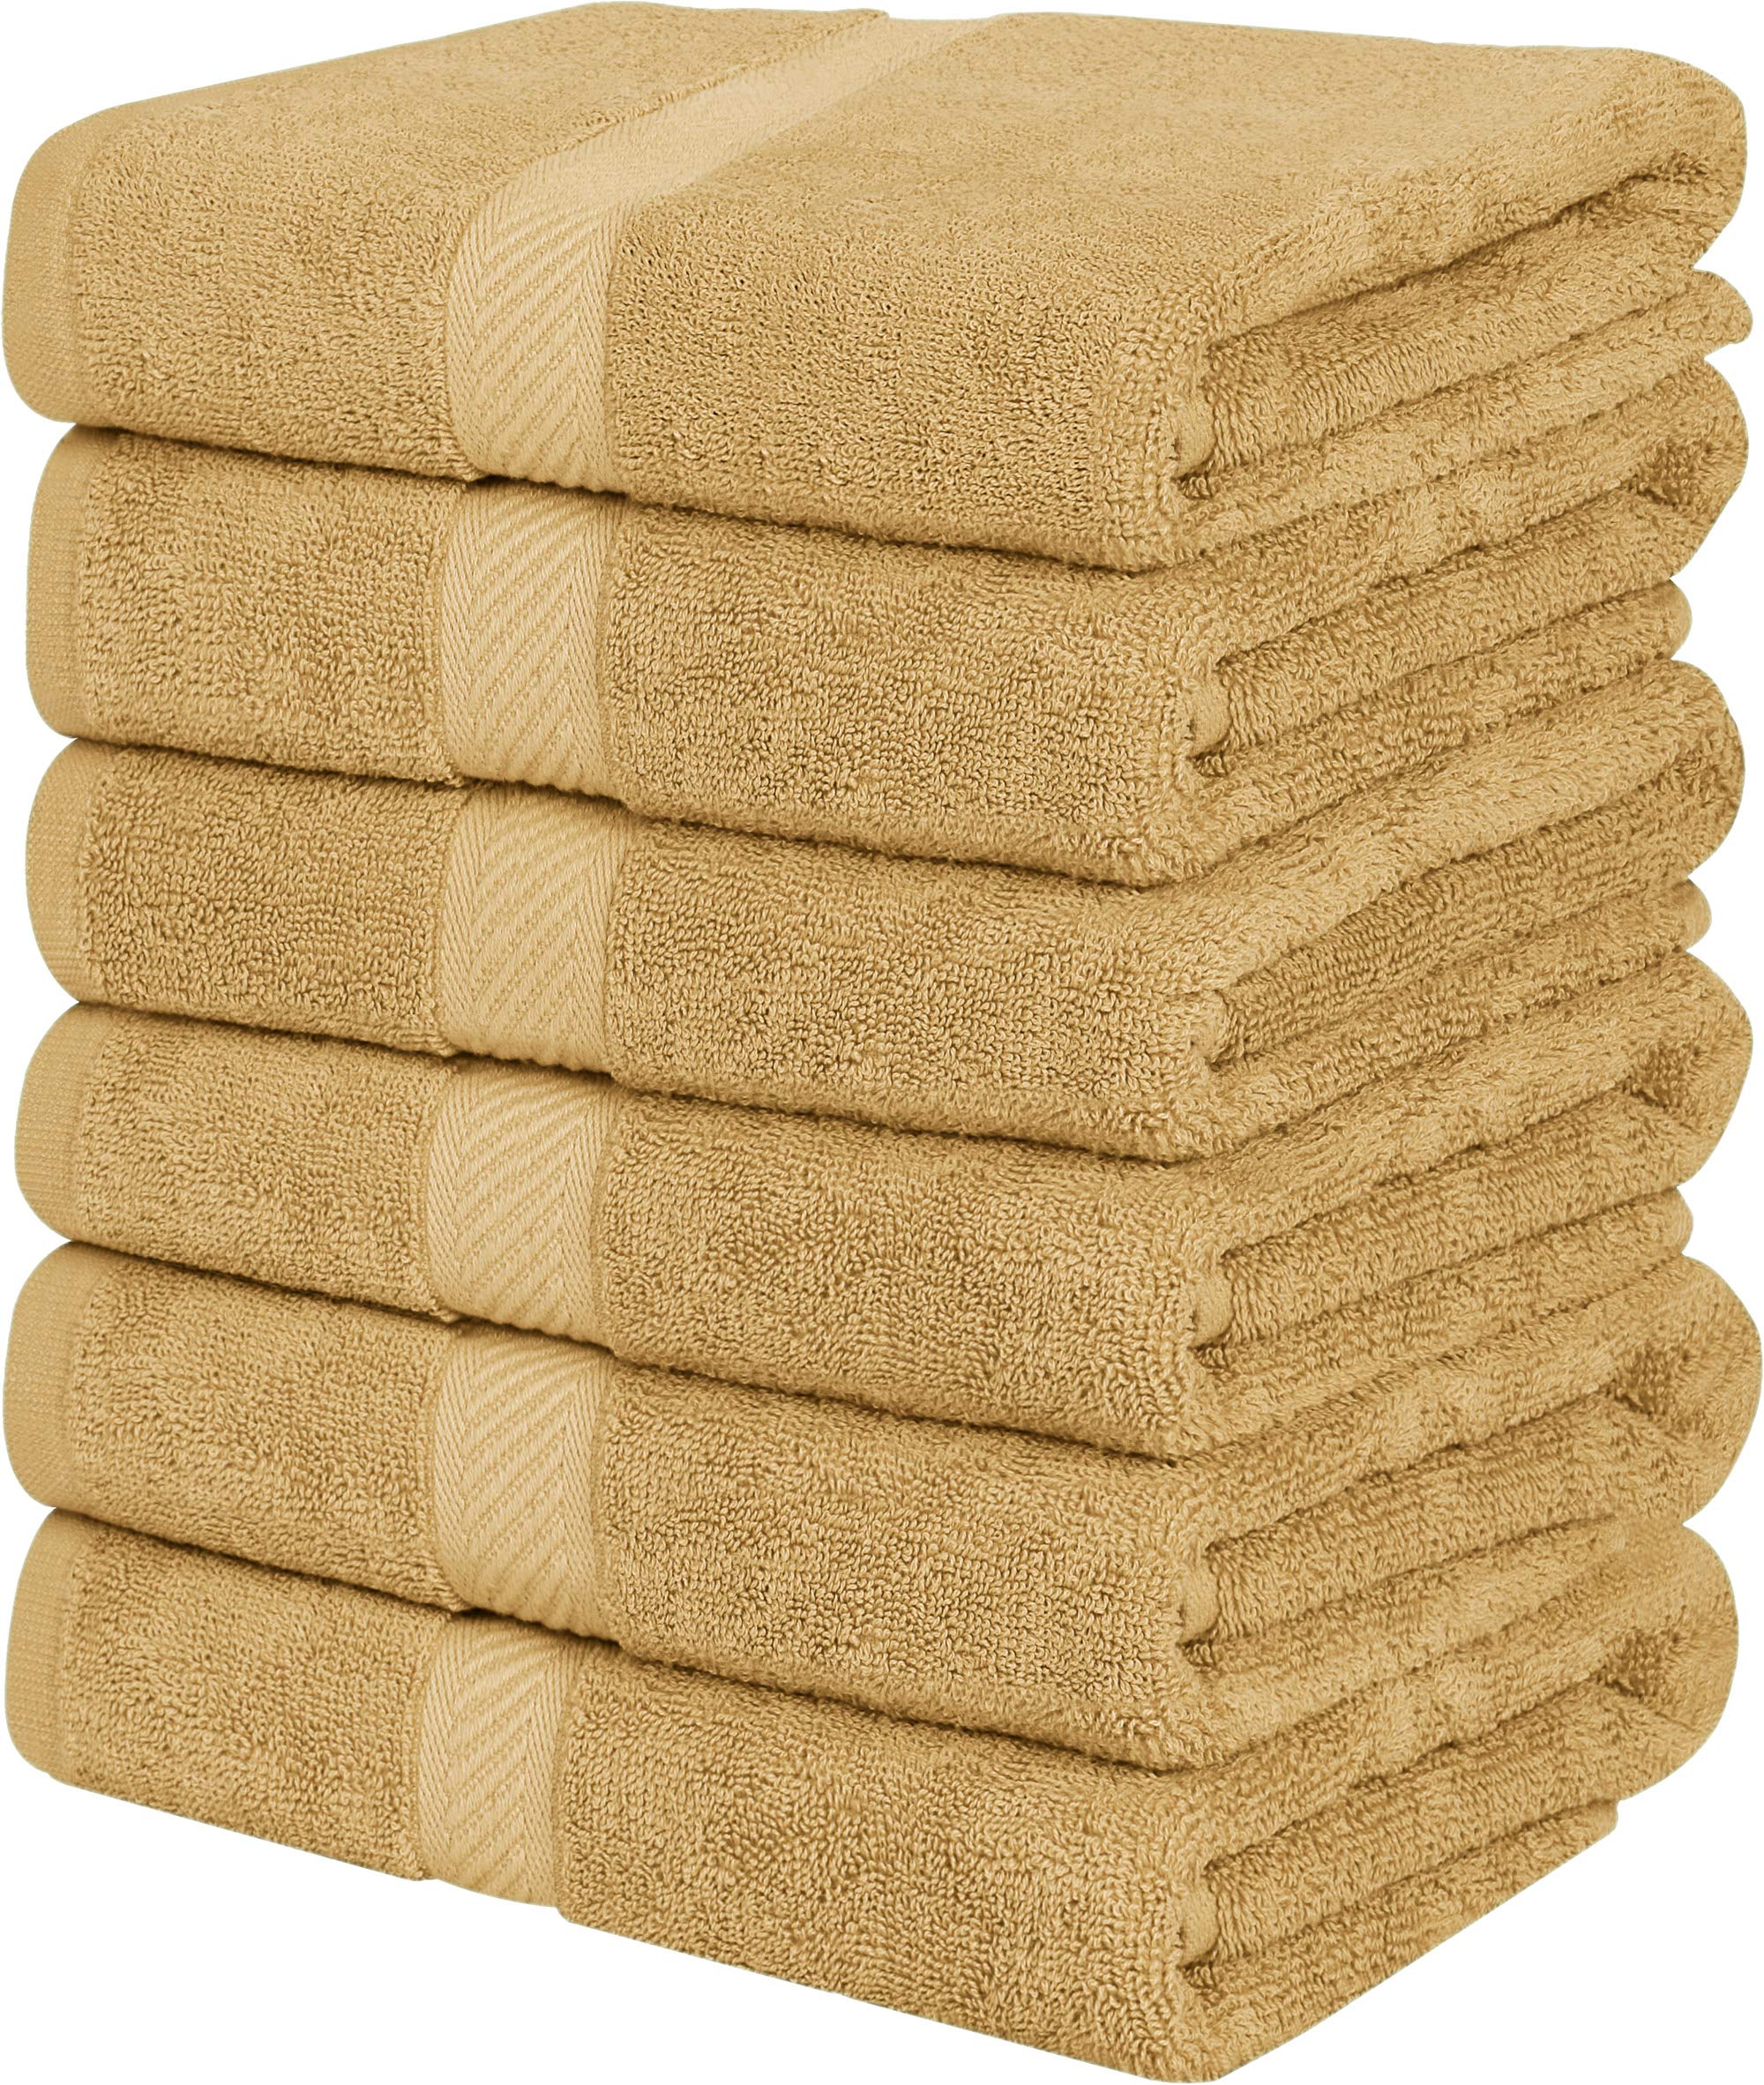 Utopia Towels 6 Pack Bath Towel Set, 100% Ring Spun Cotton (24 X